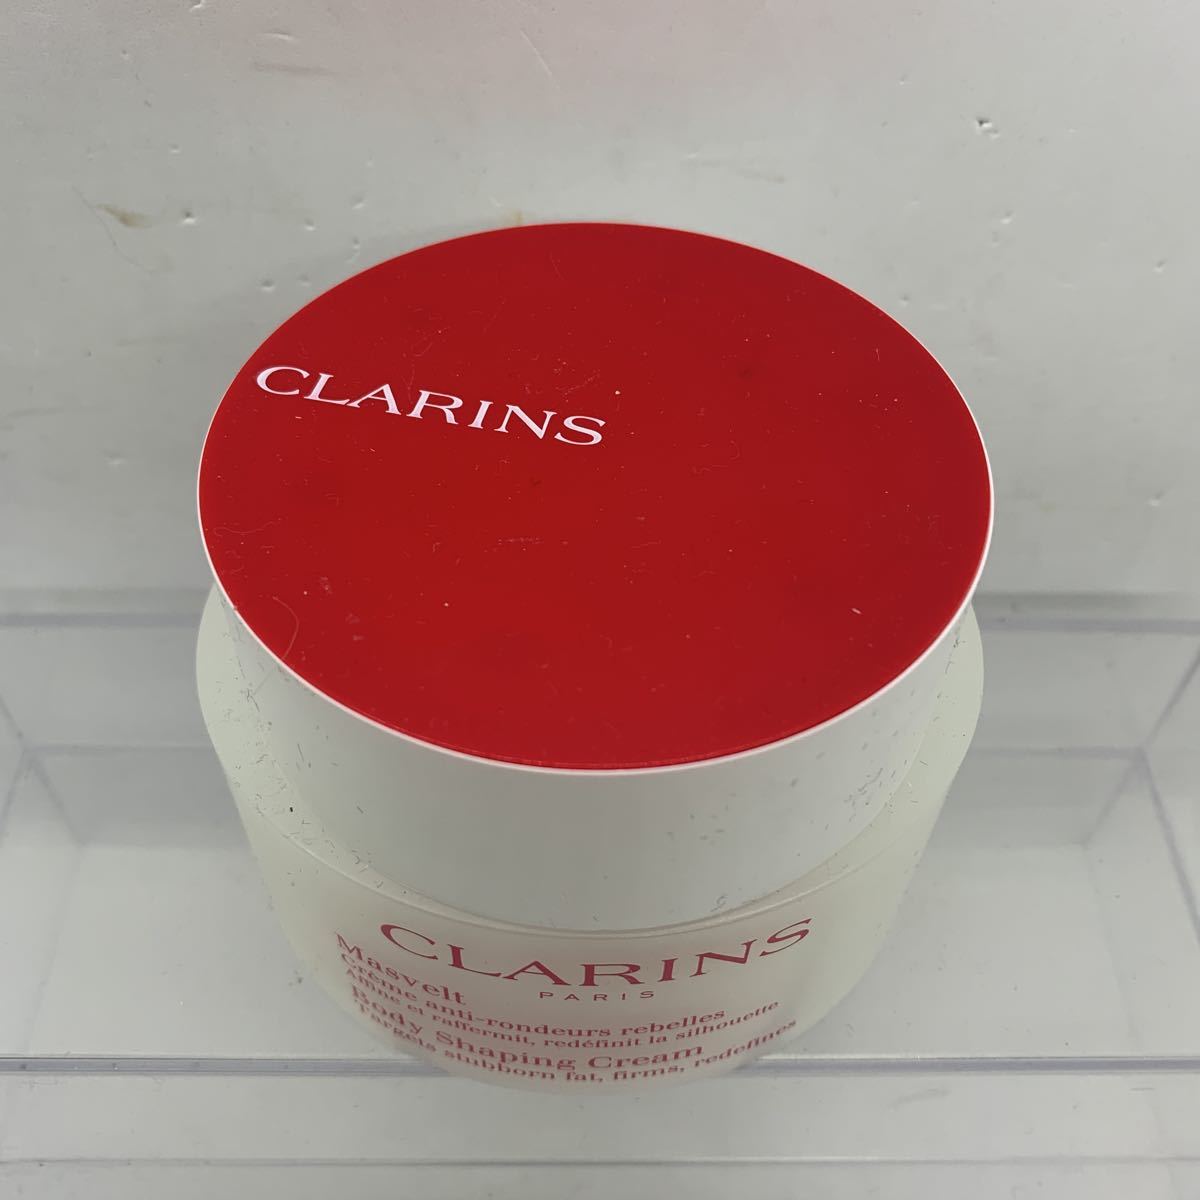 CLARINS cream claim trout veruto body for cream 22040541